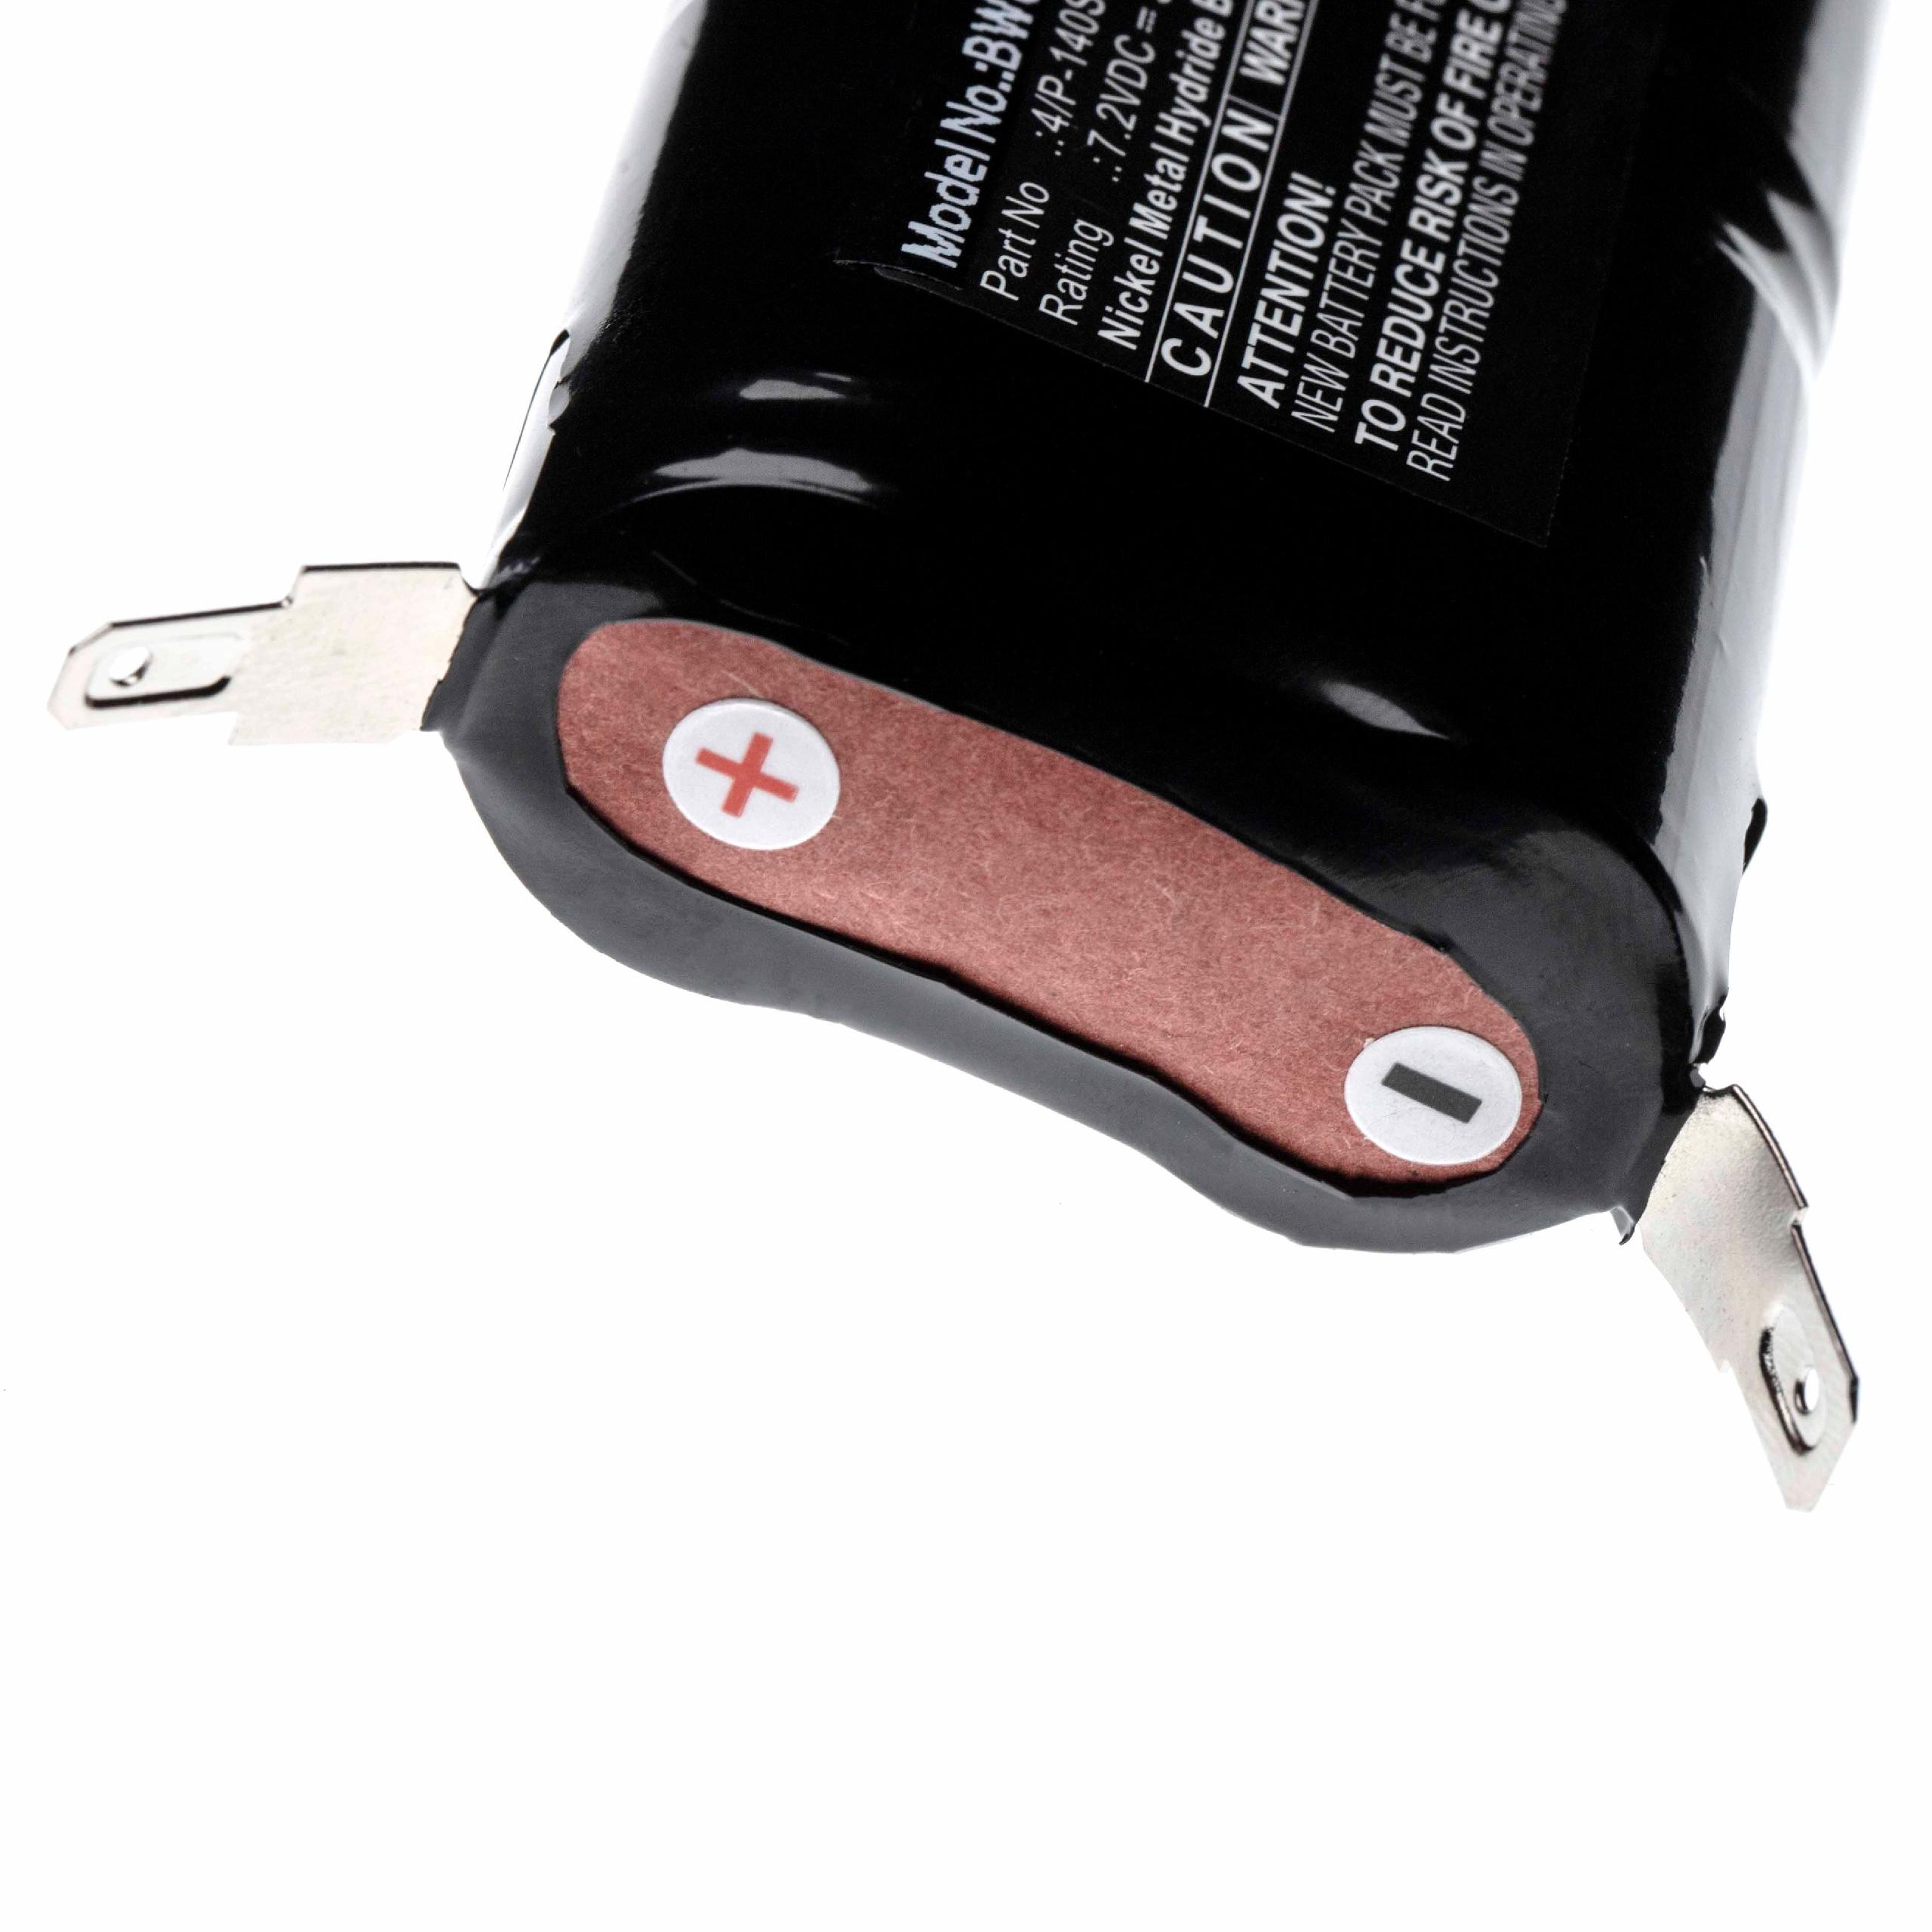 Akumulator do odkurzacza zamiennik Makita BCM-678135-1, 678135-1, 678132-7, 678114-9 - 3000 mAh 7,2 V NiMH